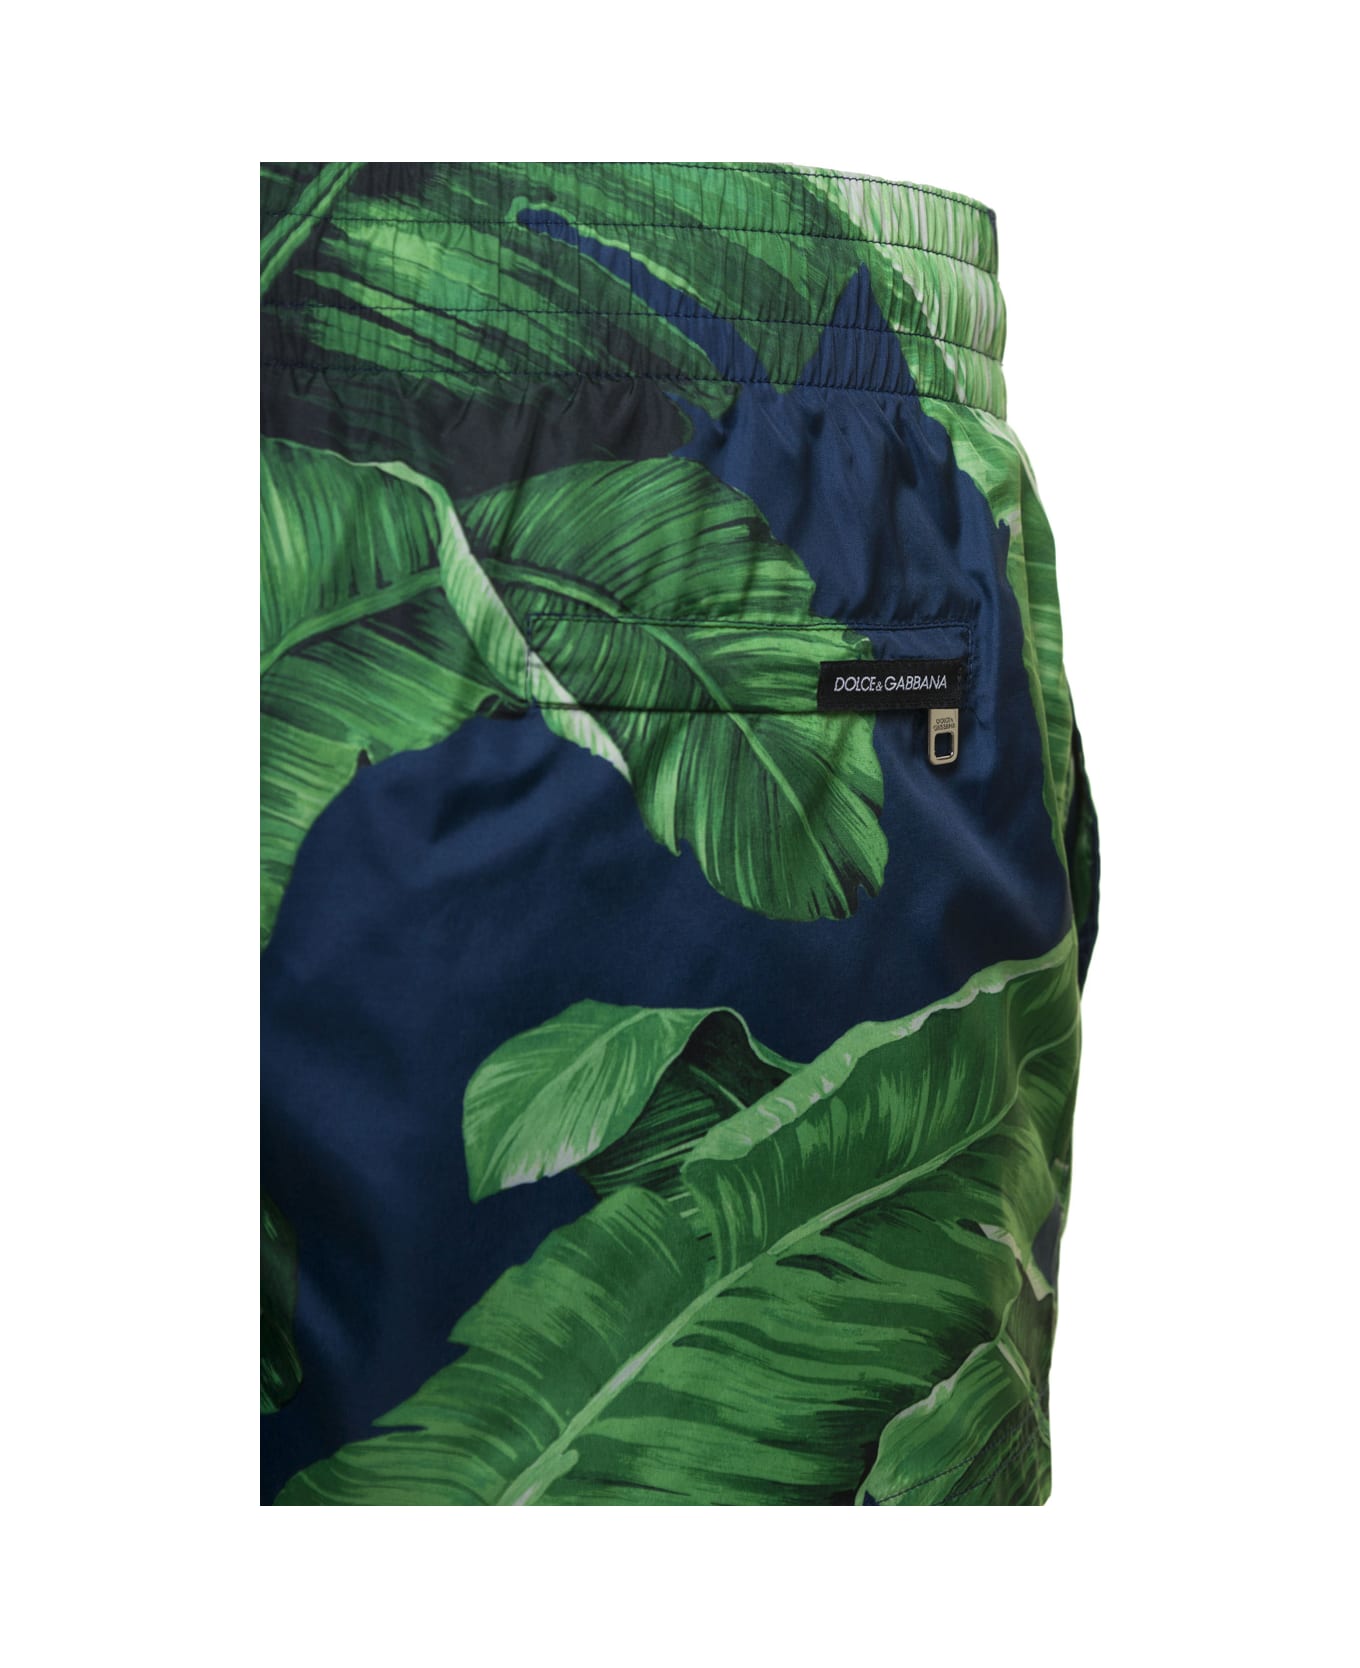 Dolce & Gabbana Printed Swimsuit - Green 水着